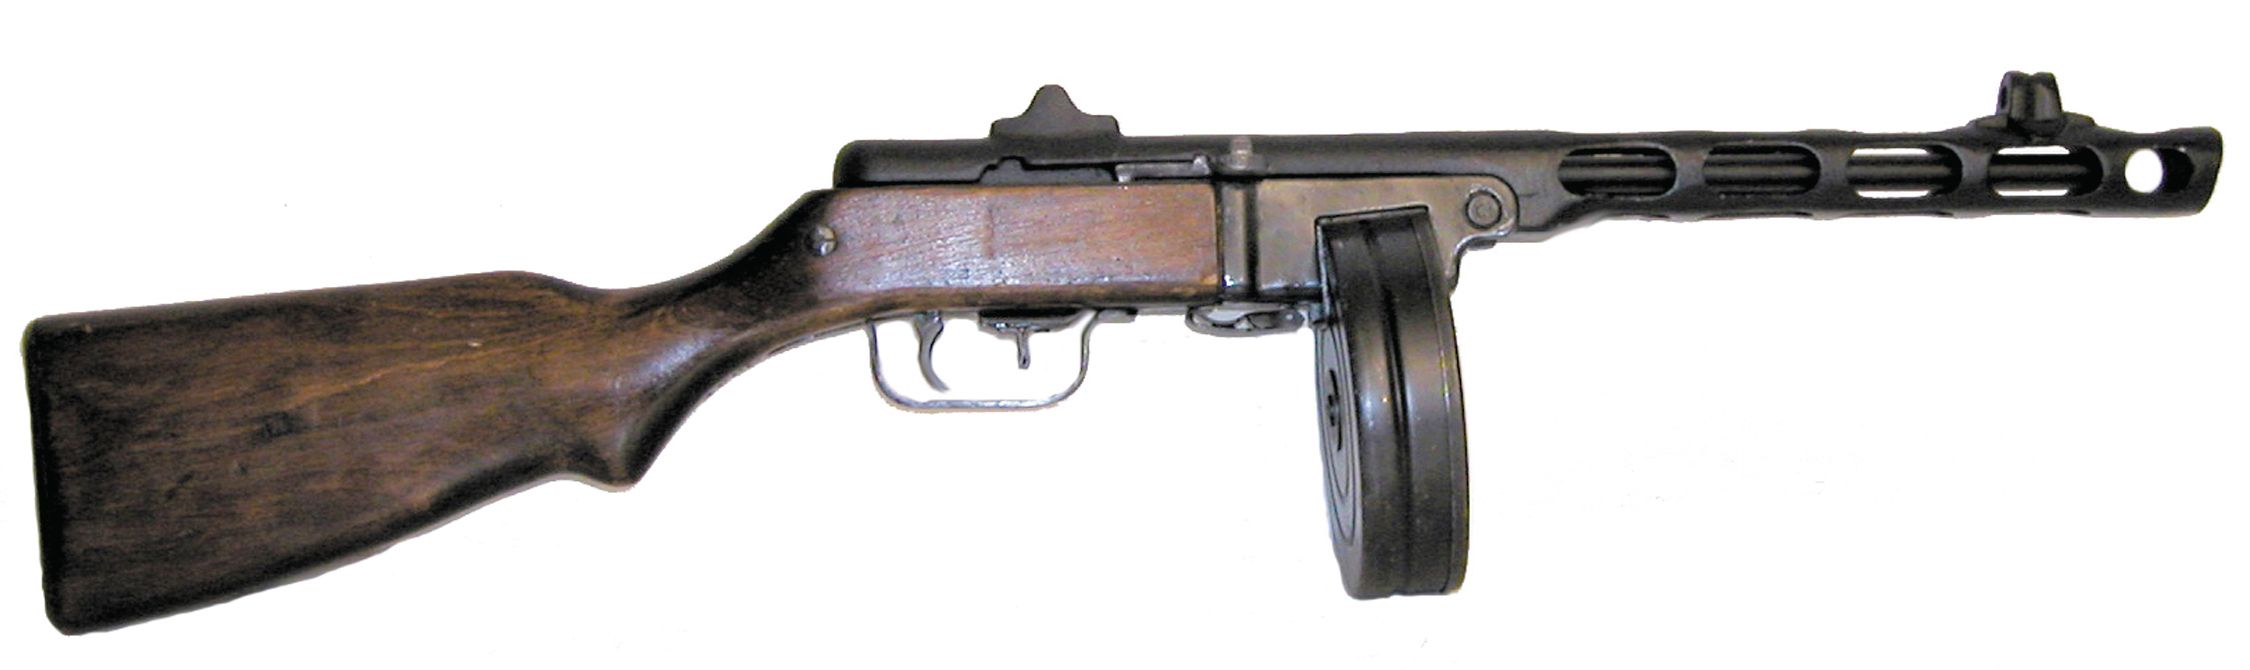 A Soviet PPSh-41, the most common submachine gun of World War II.